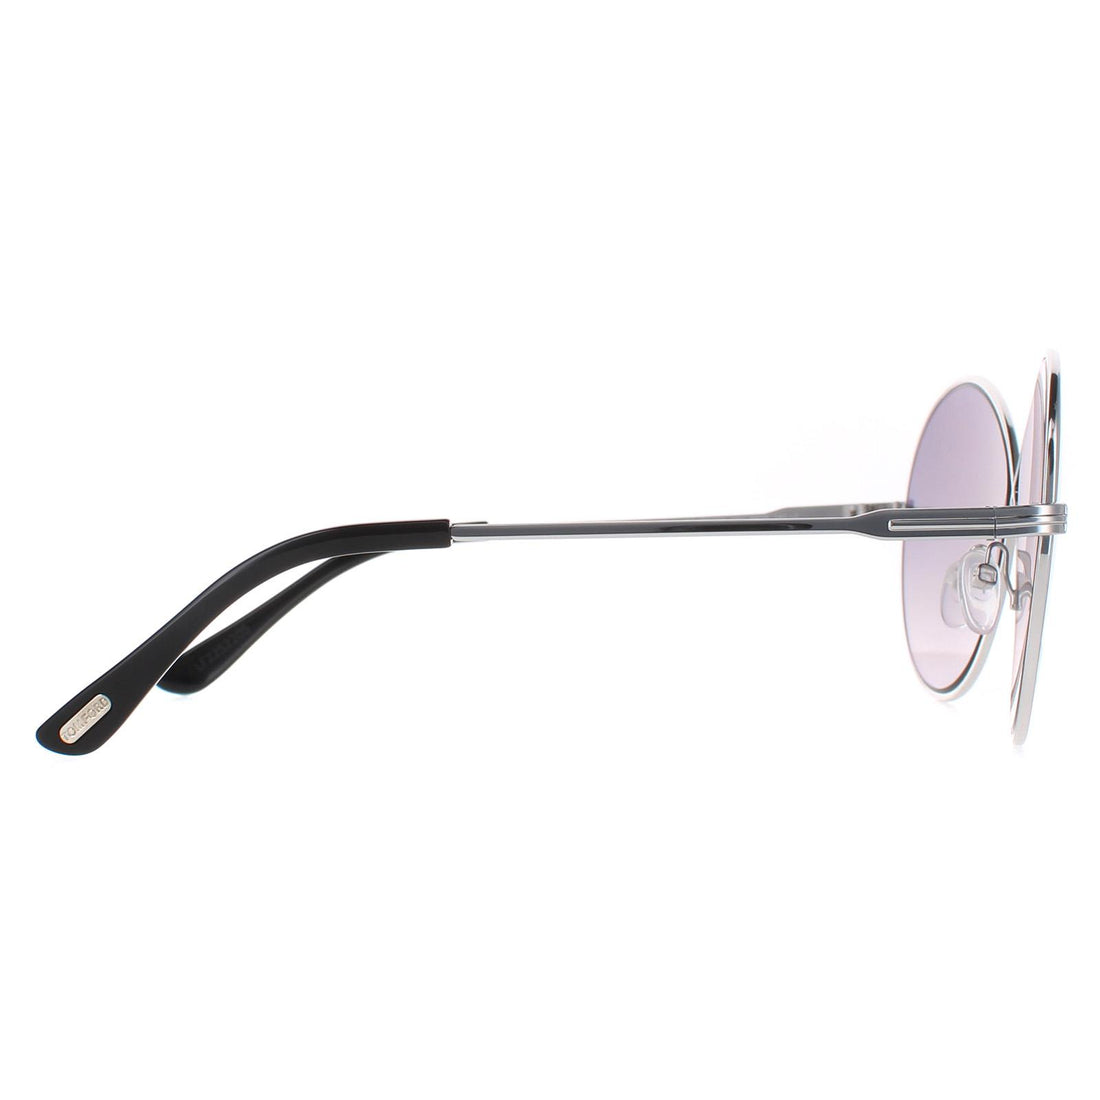 Tom Ford Sunglasses 0564 Rania 02 18C Shiny Rodium Smoke Grey Mirror